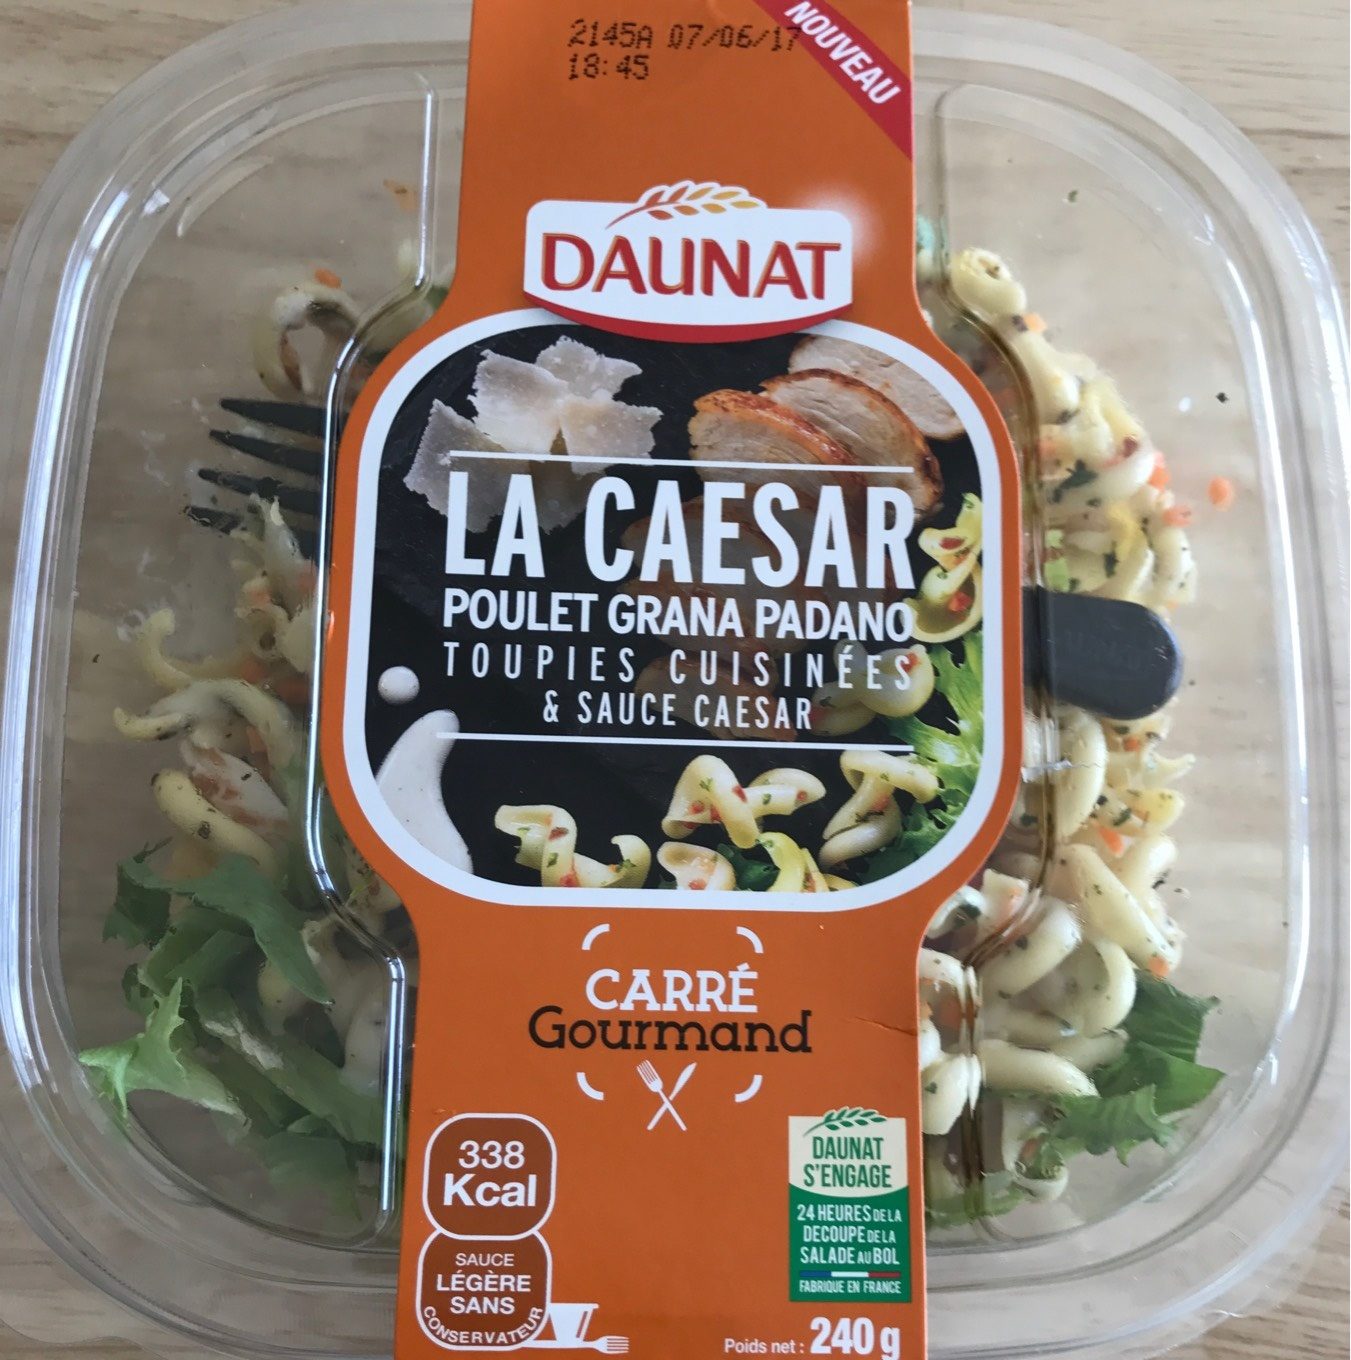 La Caesar - Poulet Grana Padano toupies cuisinées & sauce caesar - Prodotto - fr